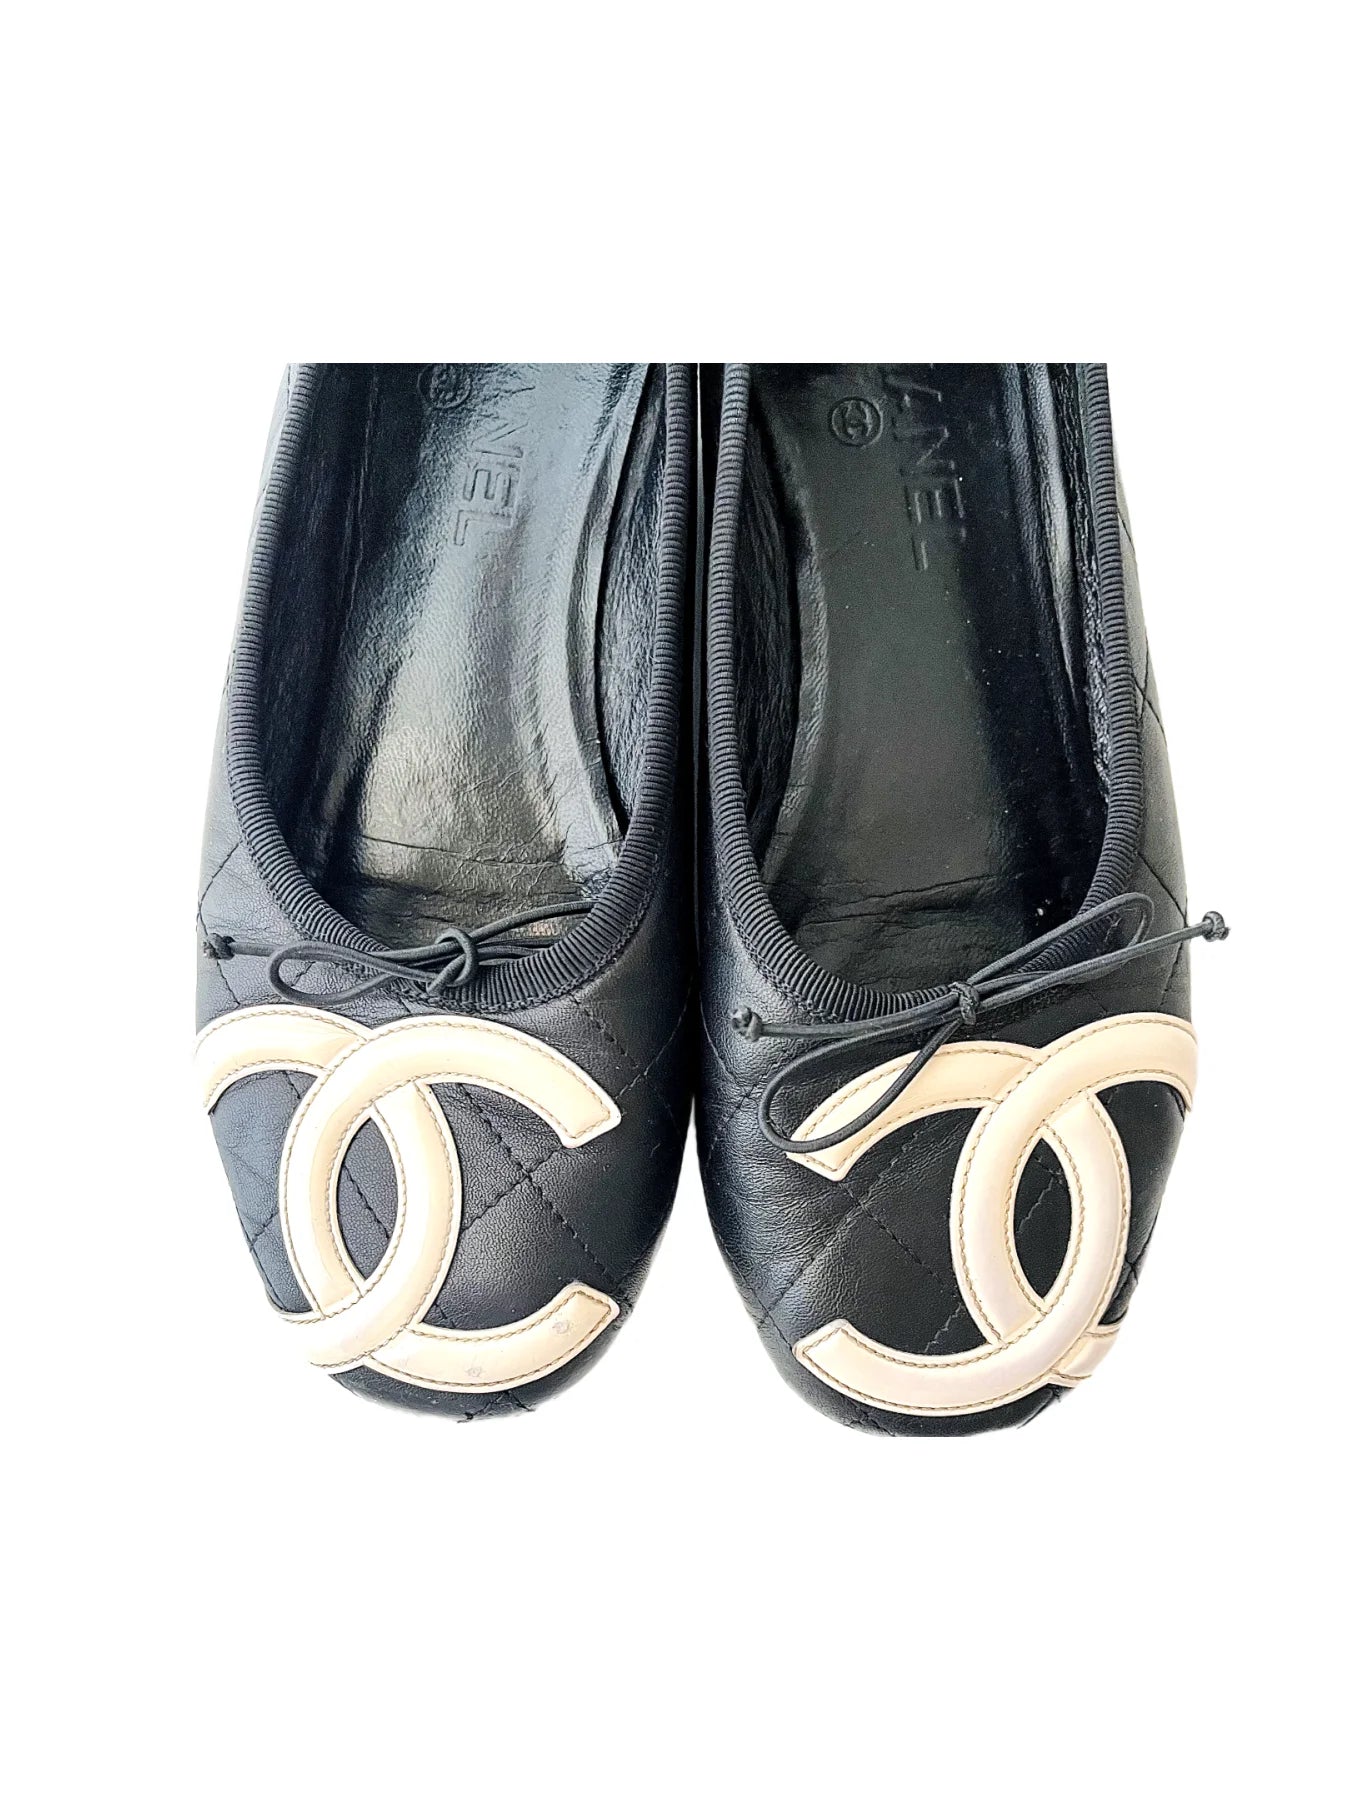 Chanel logo leather flats, 36